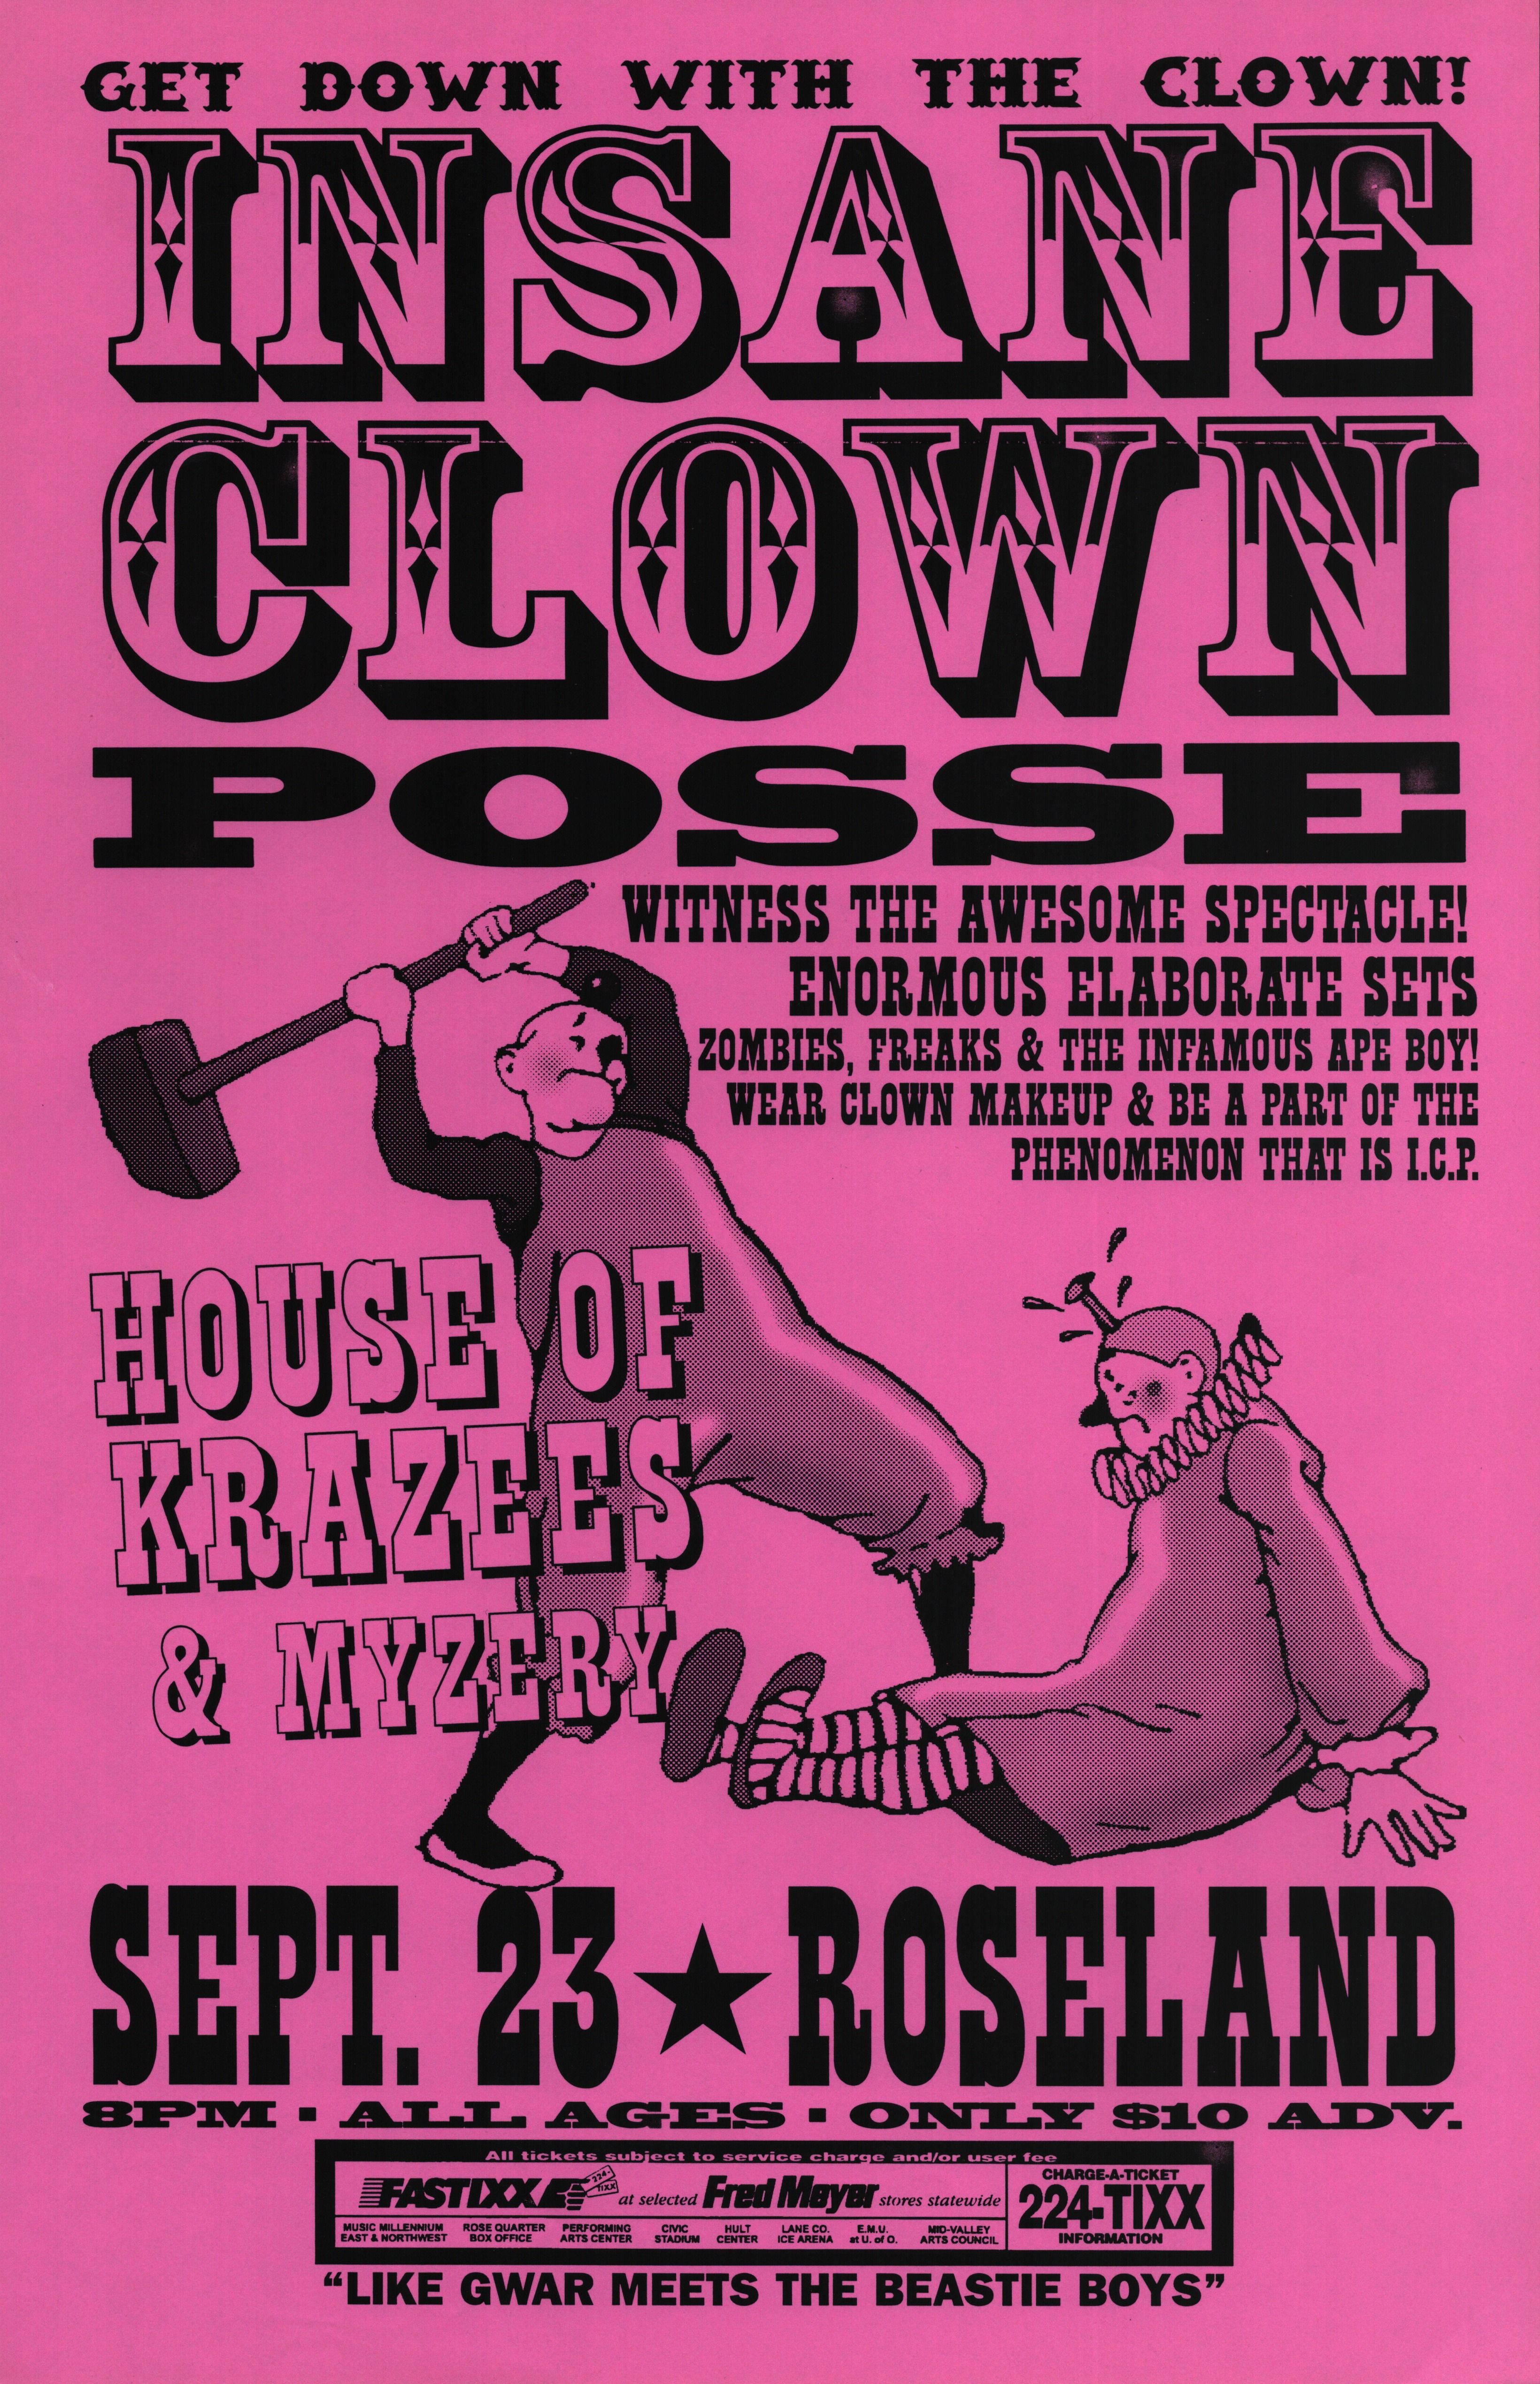 MXP-182.10 Insane Clown Posse Roseland Theater 1997 Concert Poster